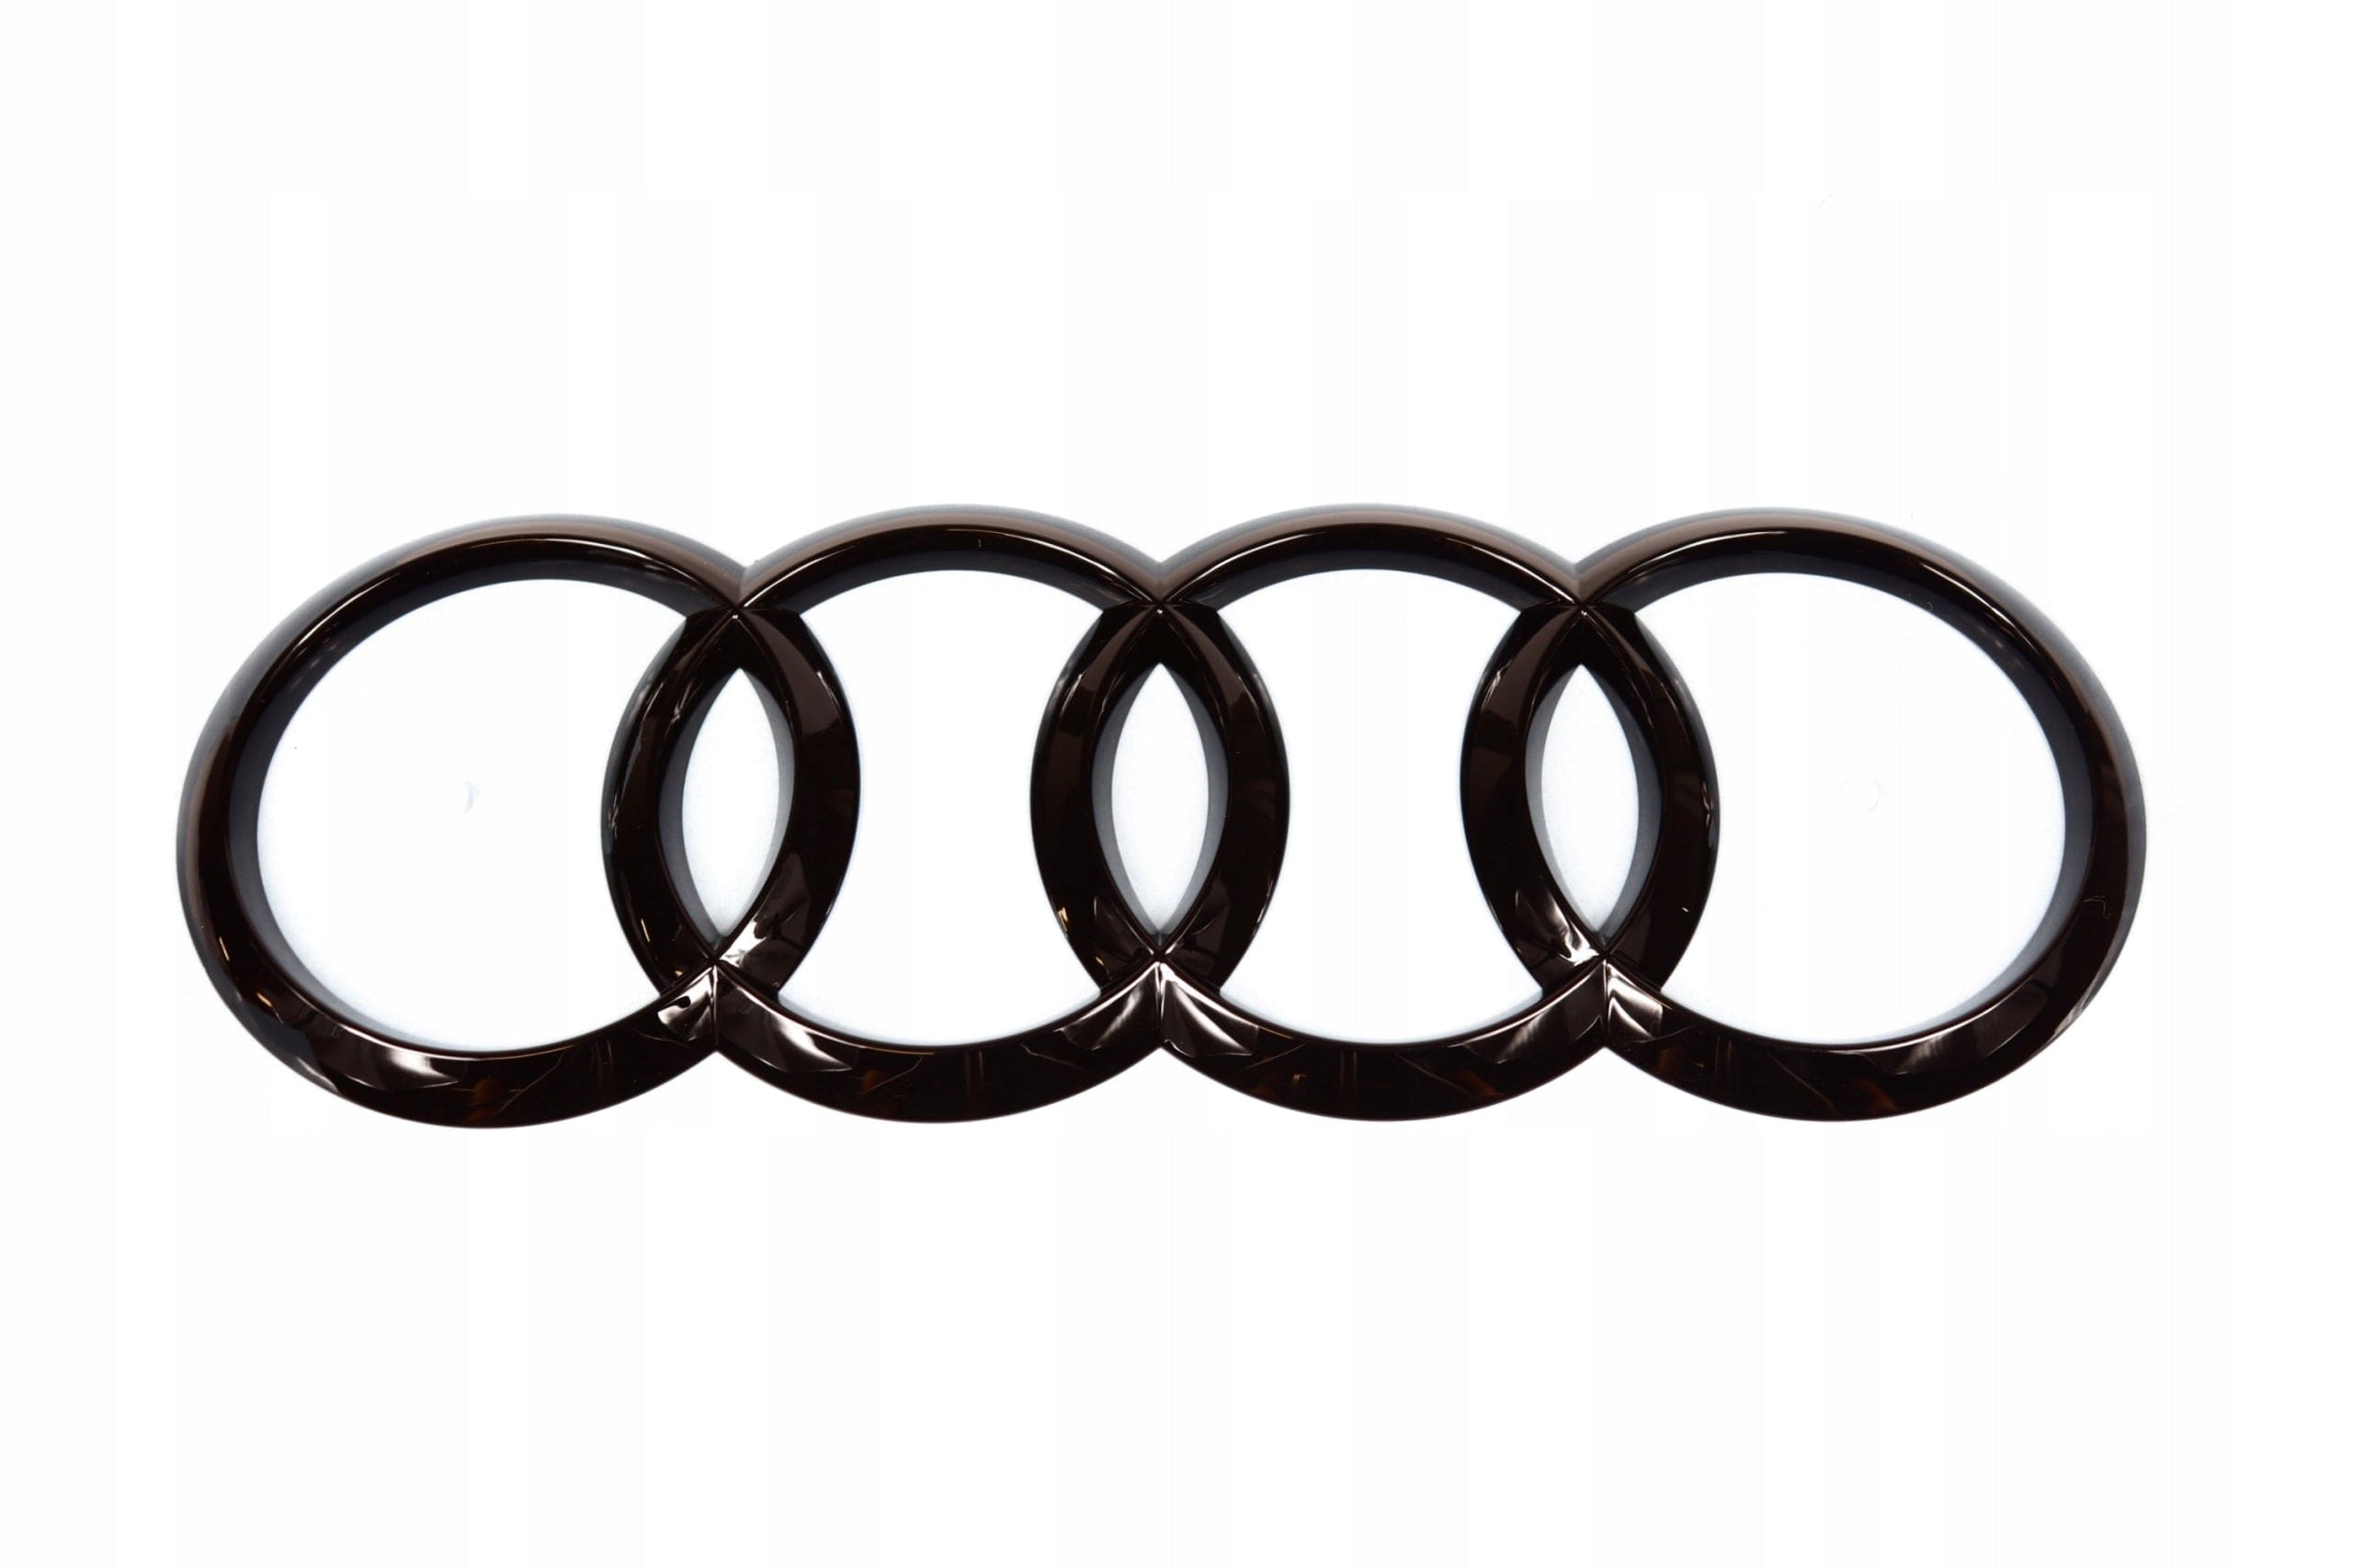 Logo Audi noir